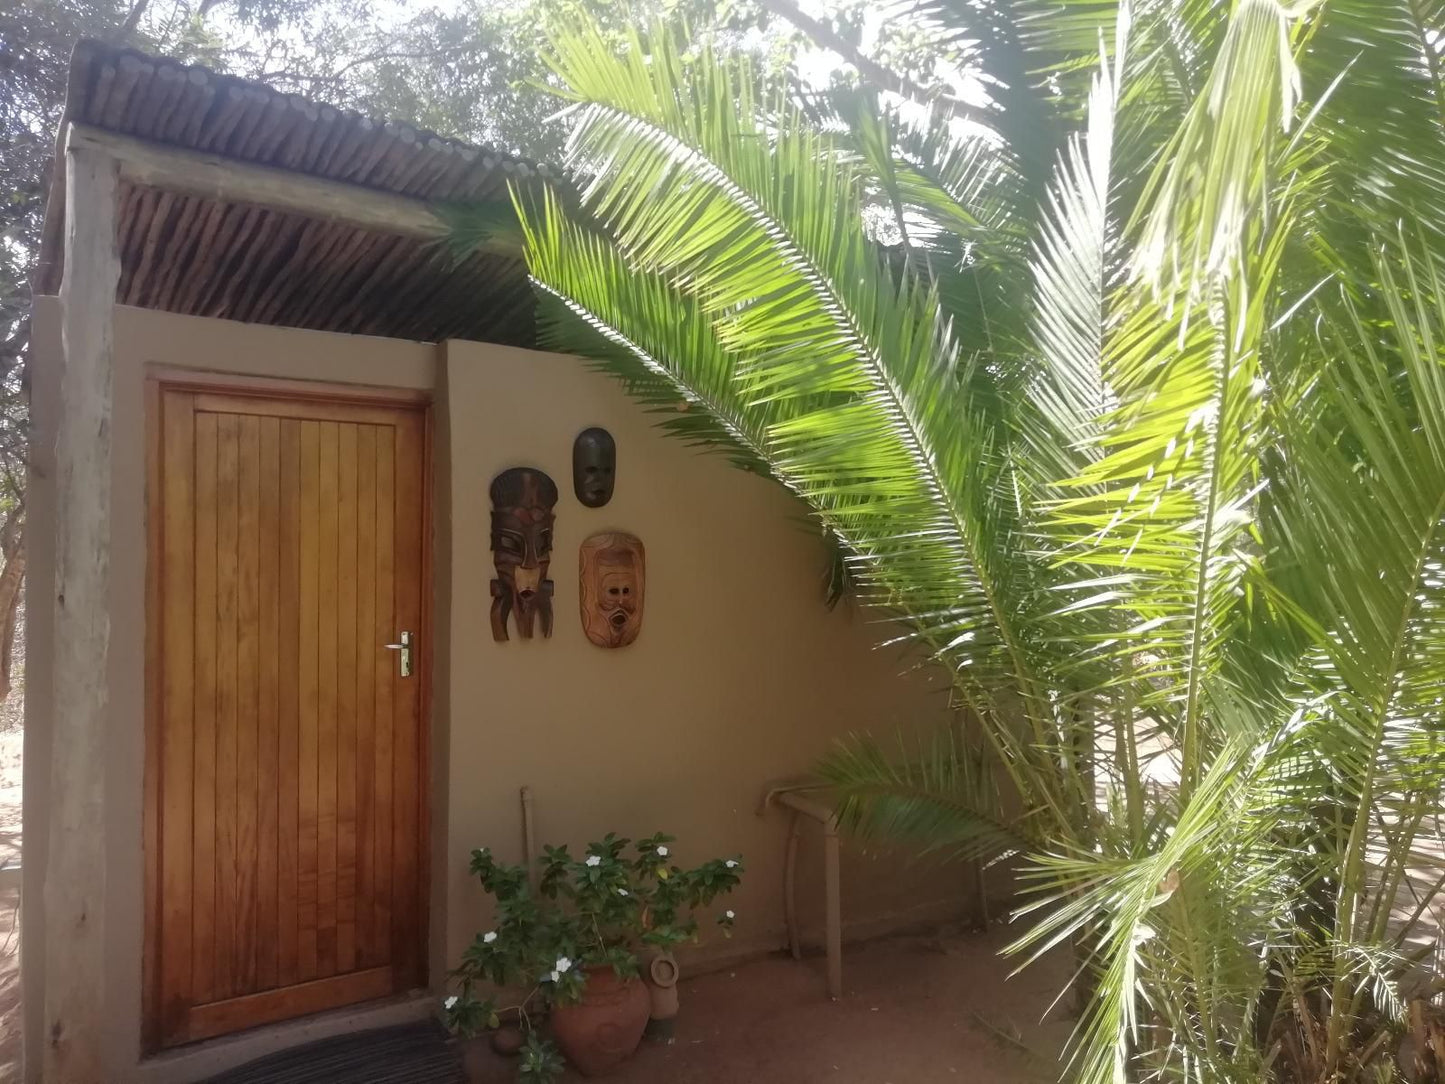 Shumba Safari Lodge Hoedspruit Limpopo Province South Africa Palm Tree, Plant, Nature, Wood